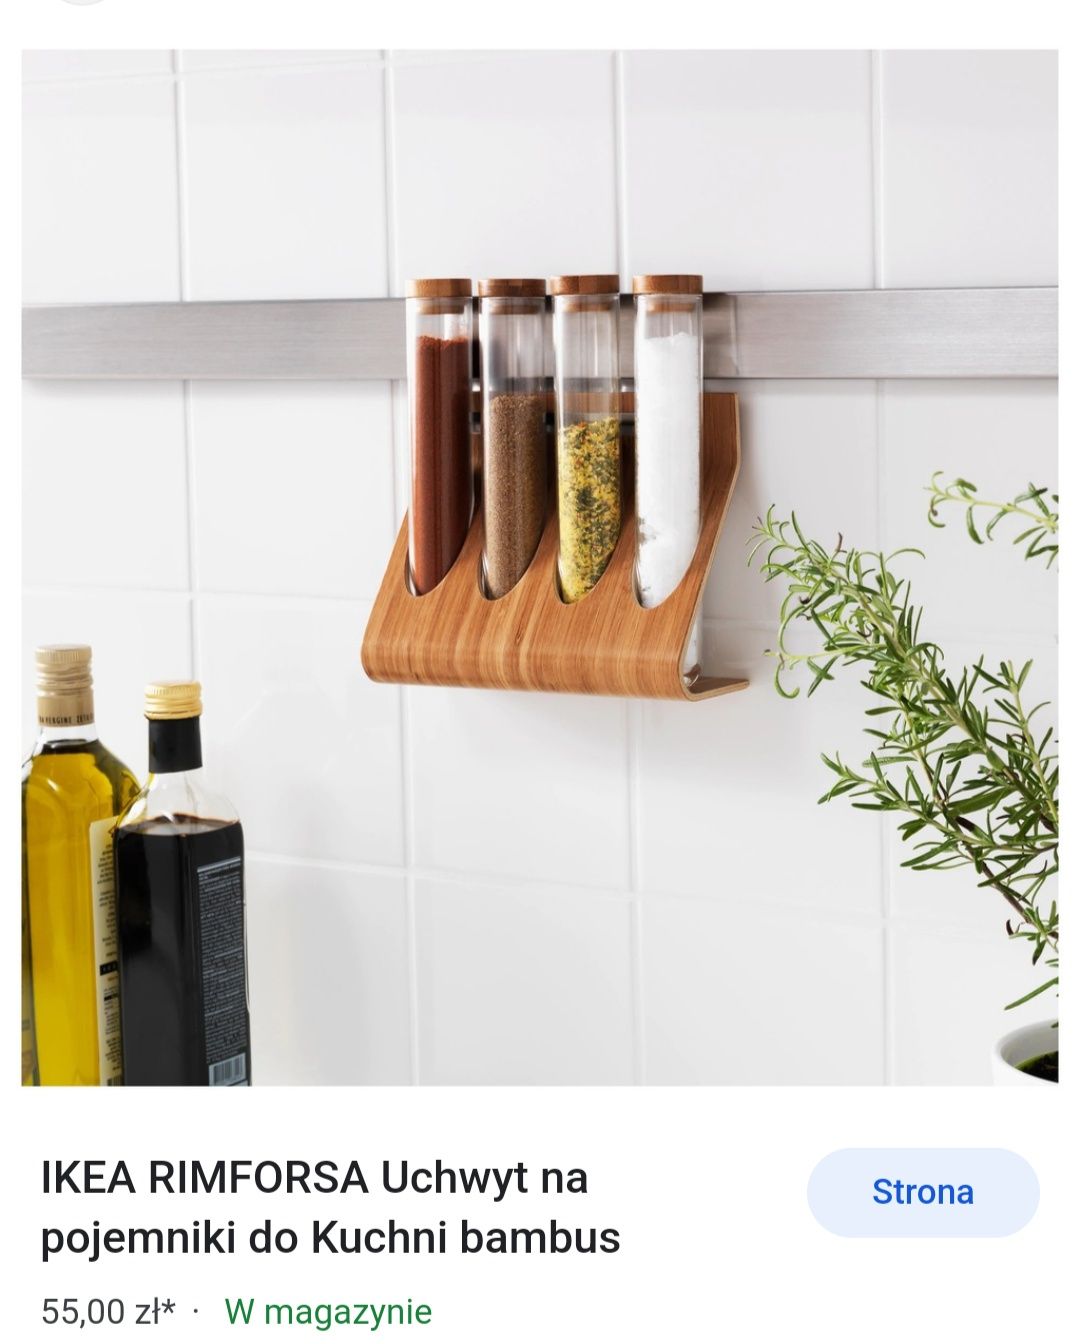 Ikea Rimforsa uchwyt pojemnika